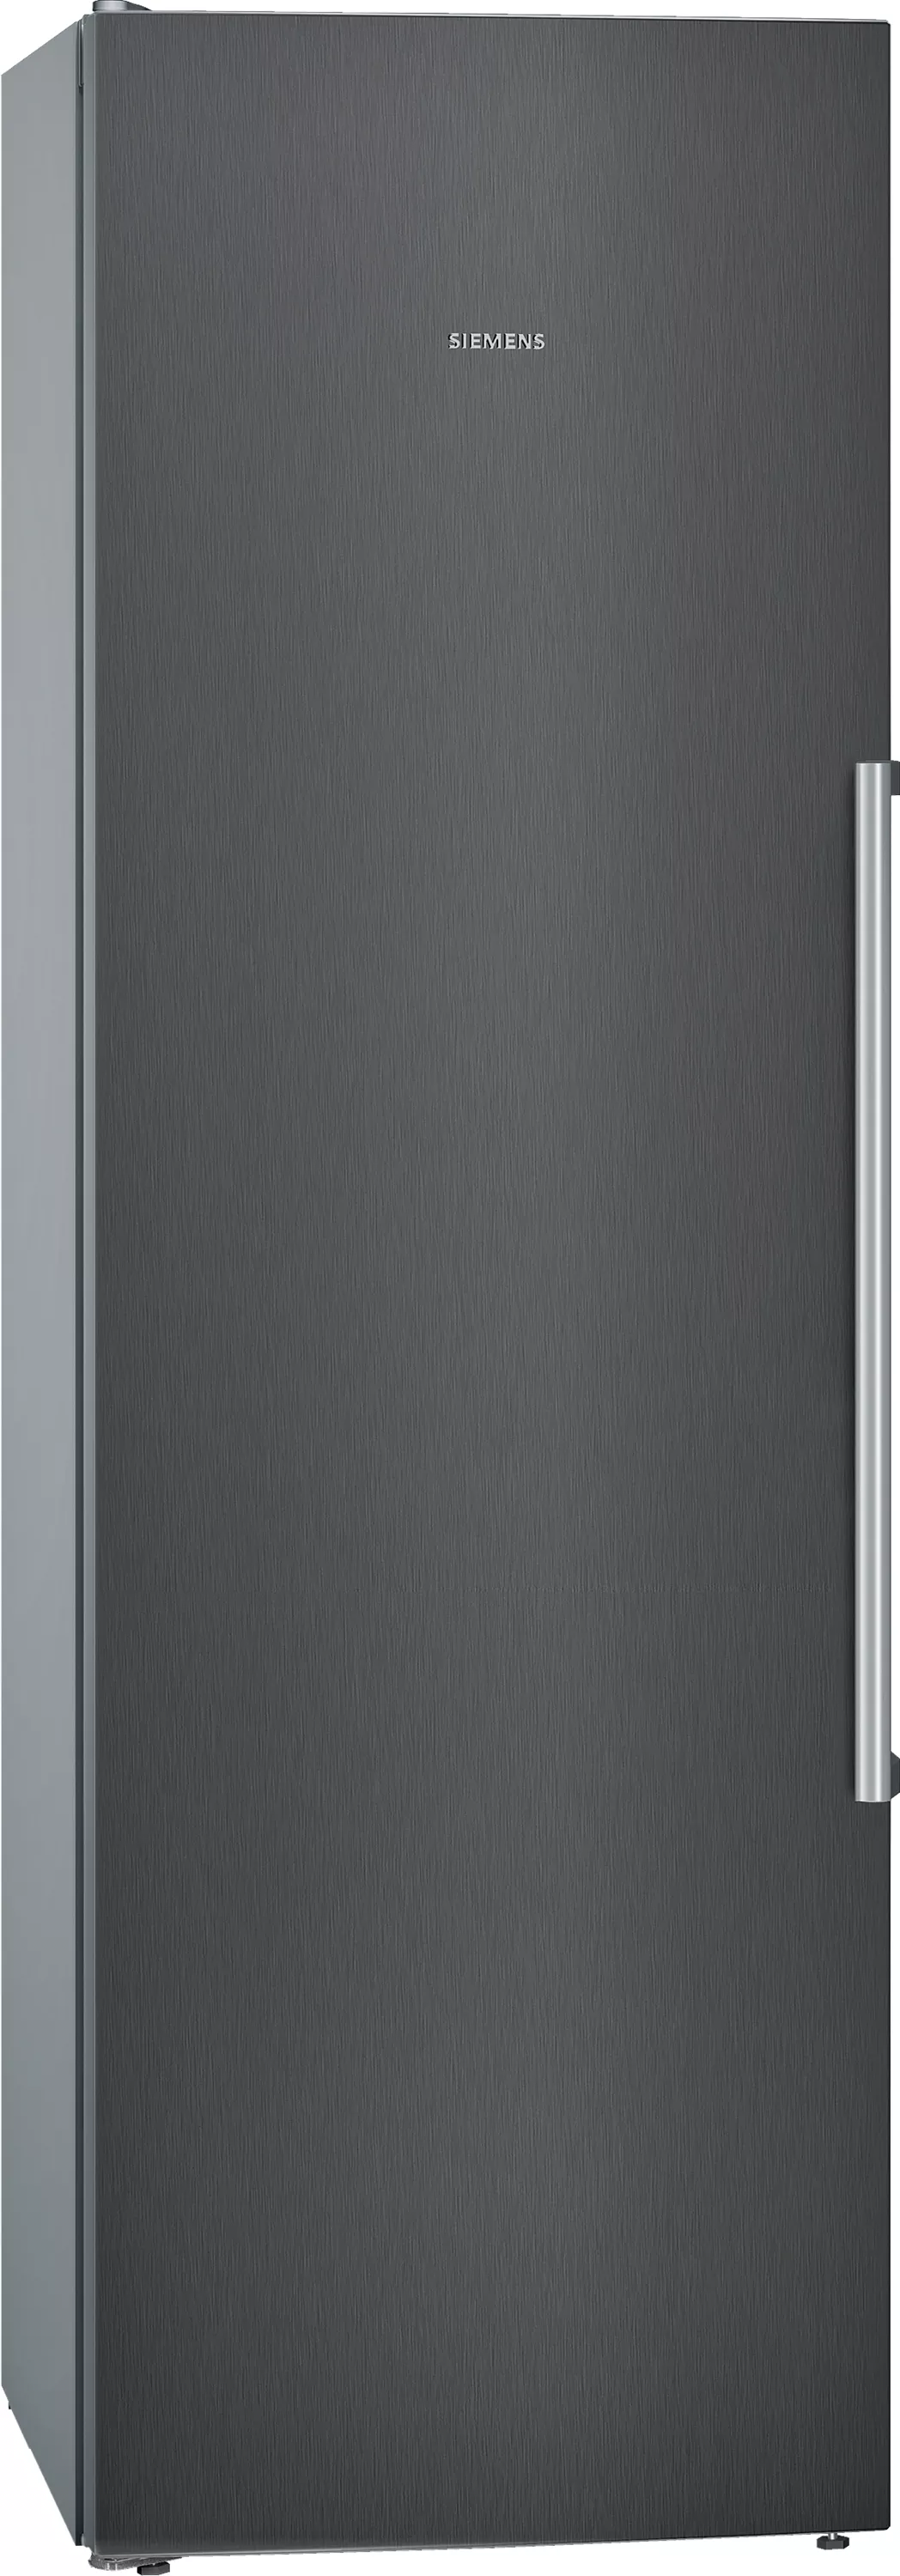 Siemens   KS36VAXEP Kühlschrank, 186 x 60 cm, Black stainless steel